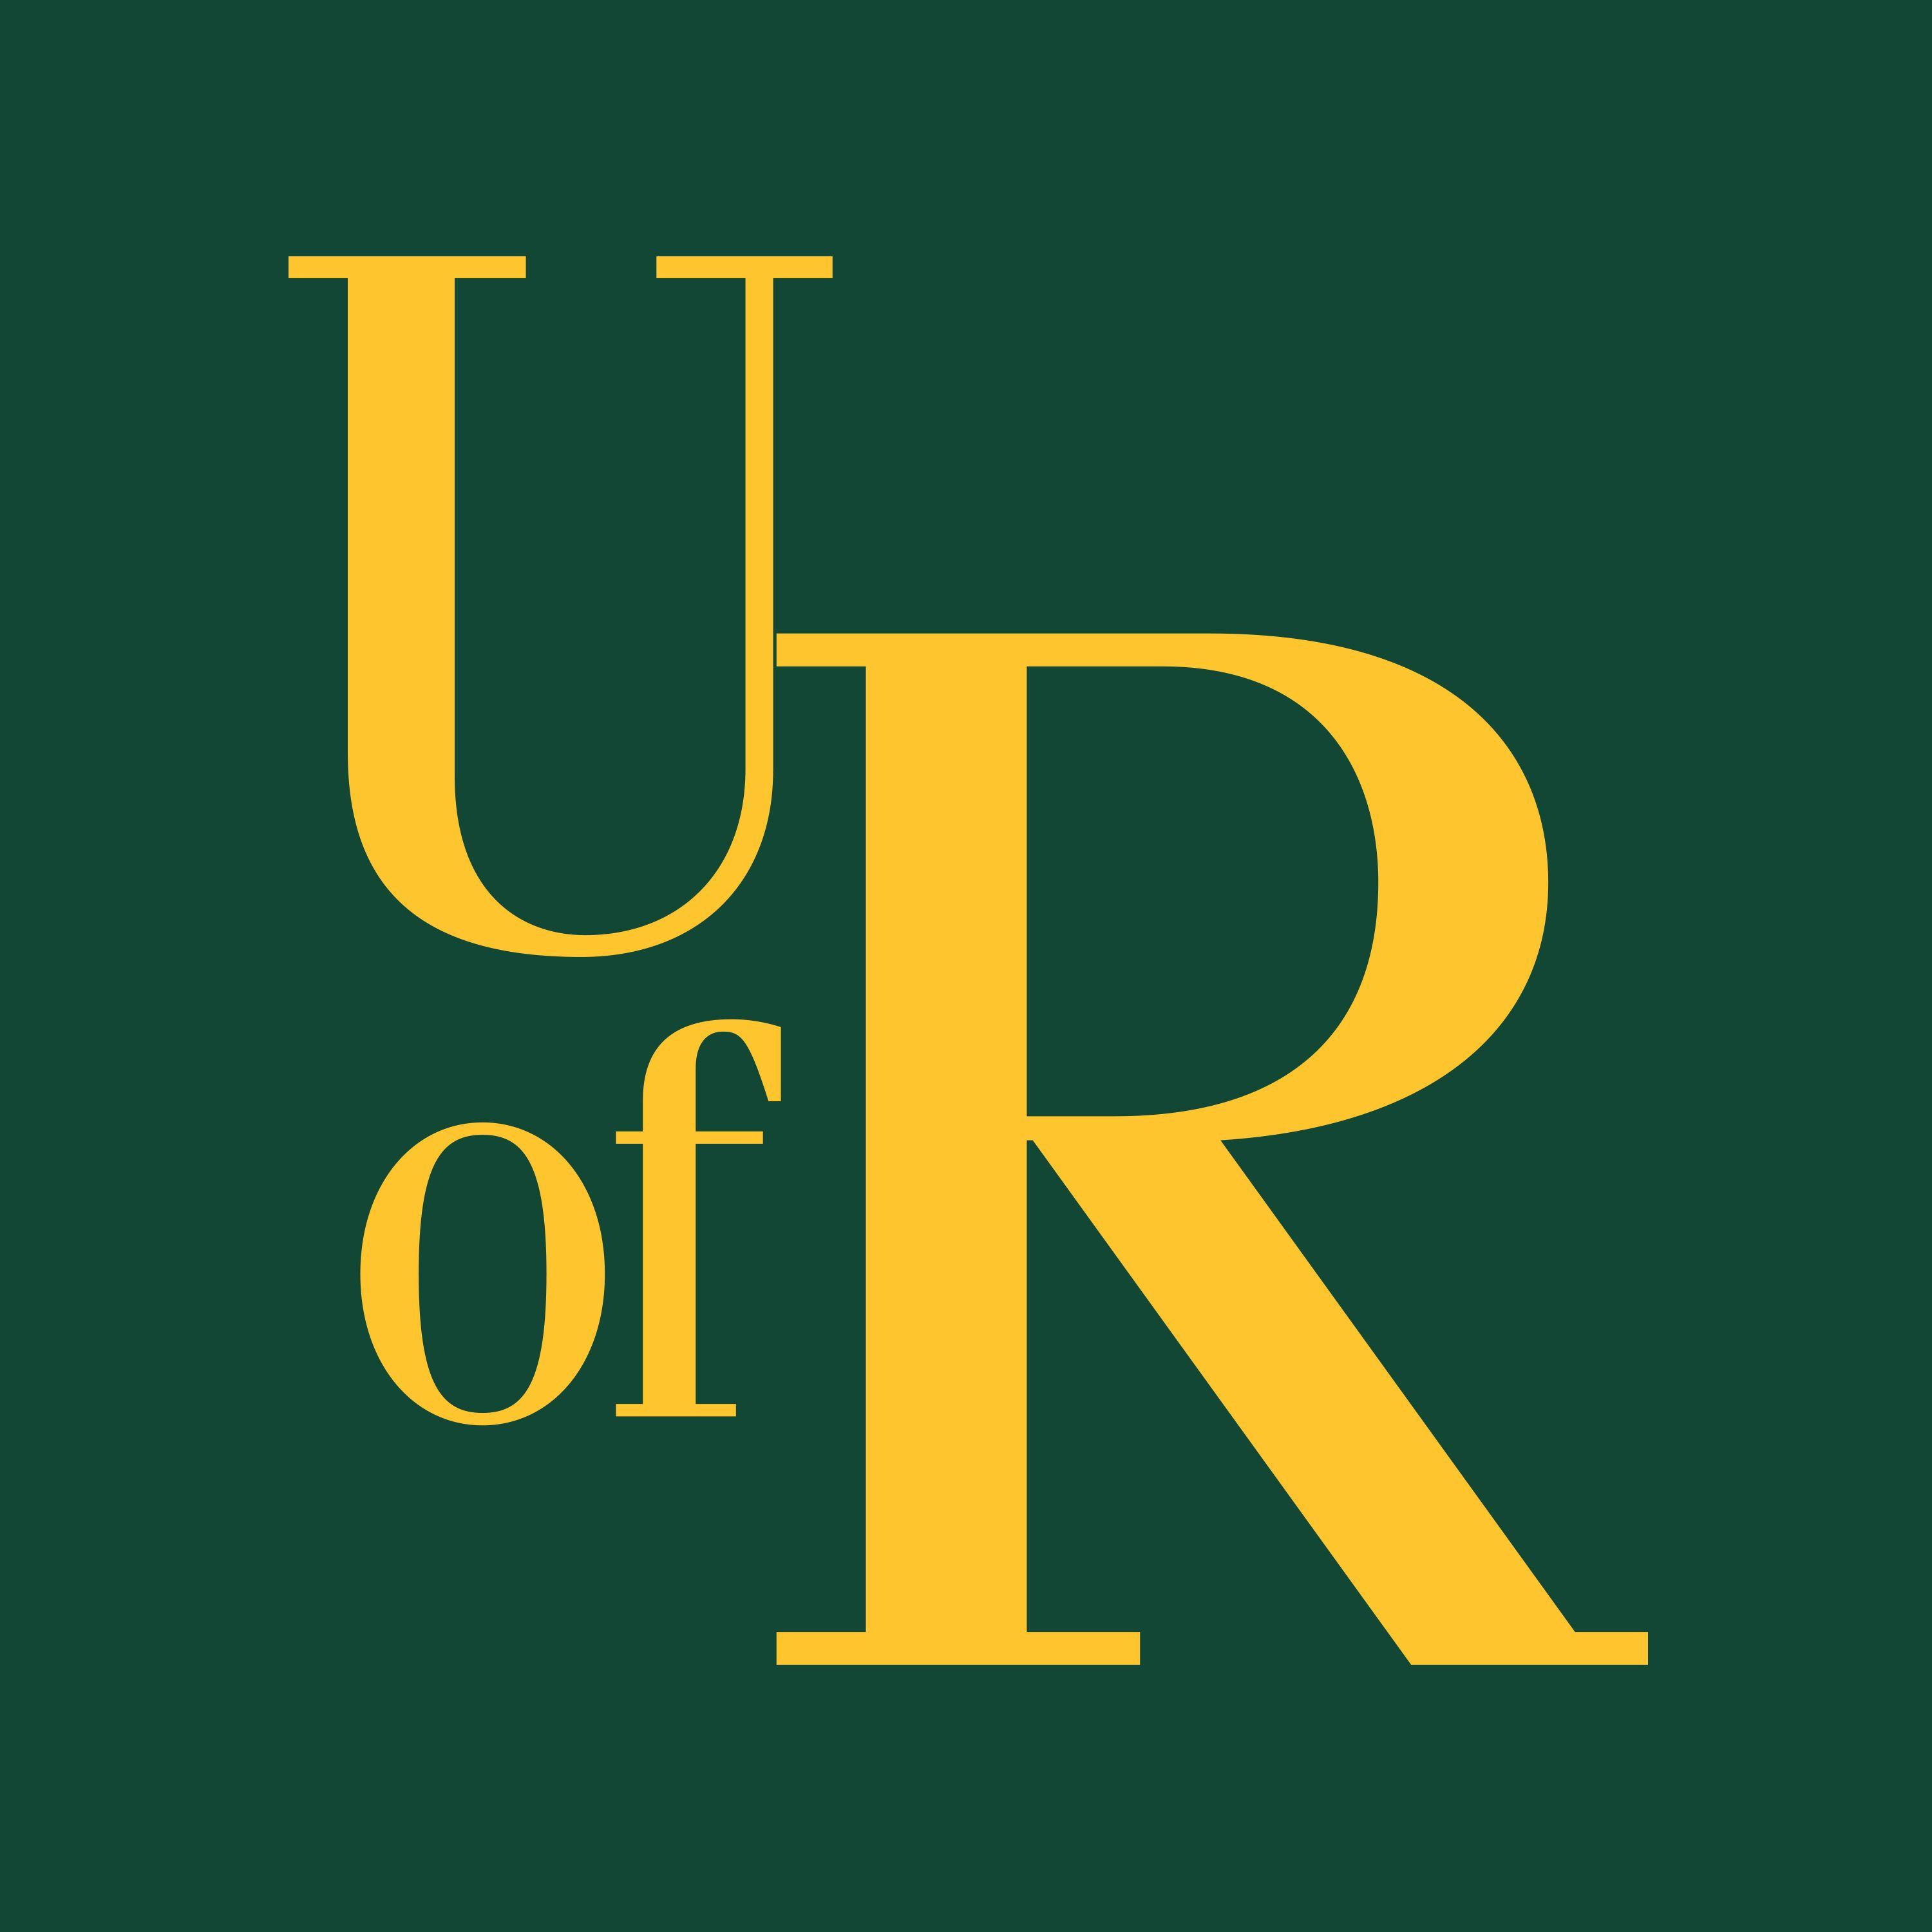 Green- R Logo - U of R Monogram | Communications and Marketing, University of Regina